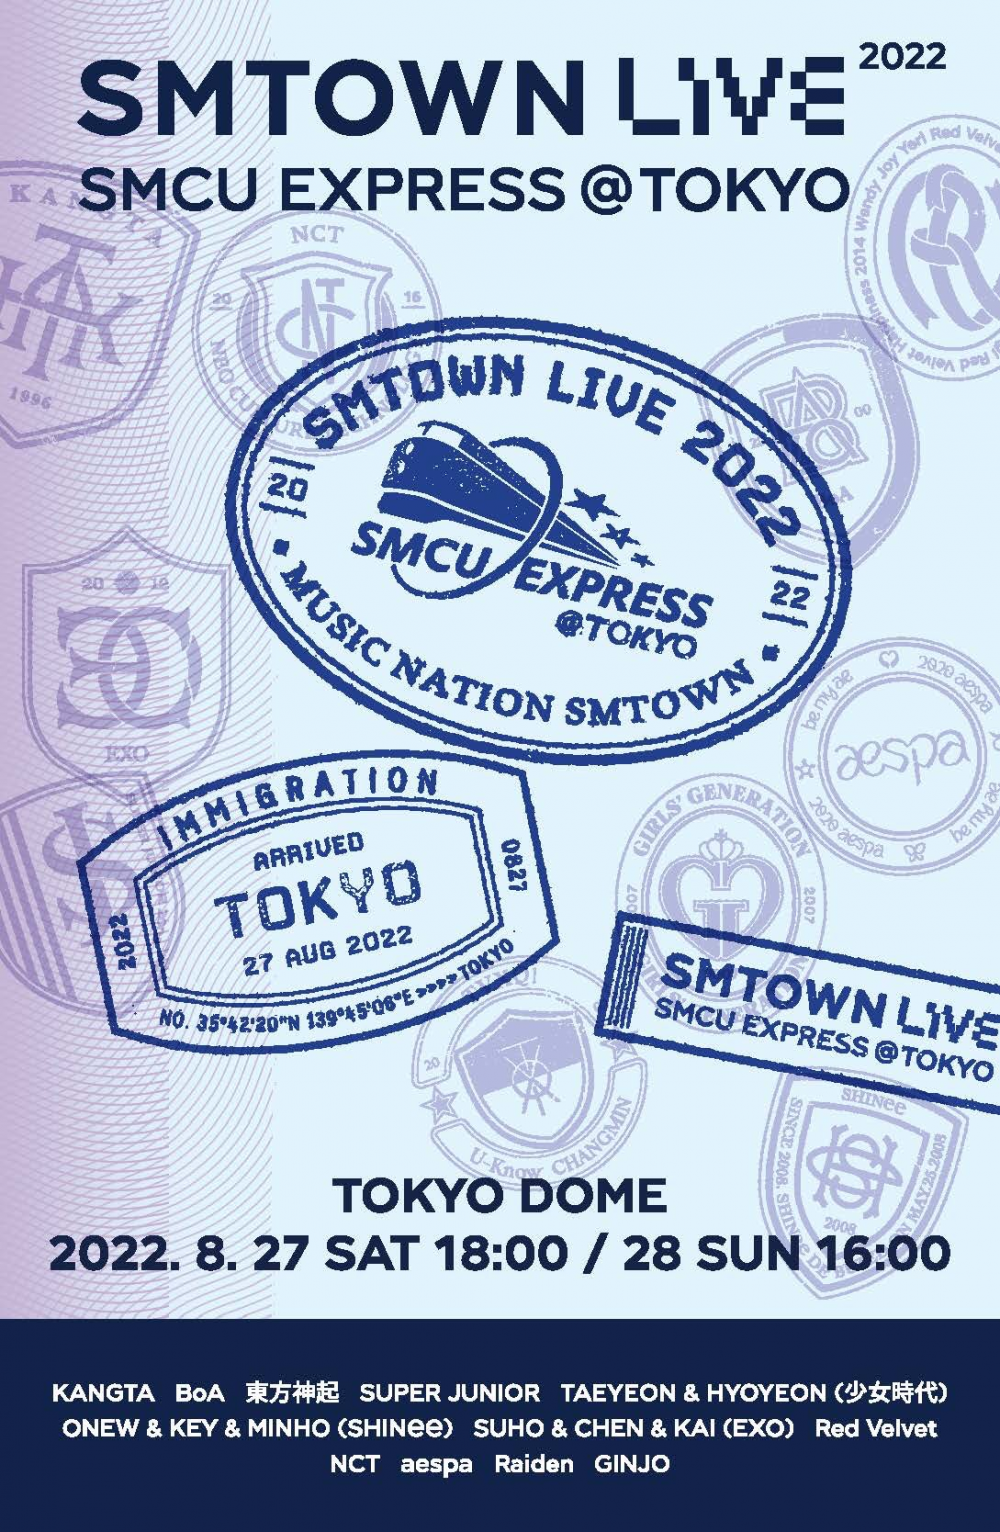 SM Entertainment опубликовали постеры к «живому» концерту «SMTOWN LIVE 2022: SMCU Express @ Tokyo»